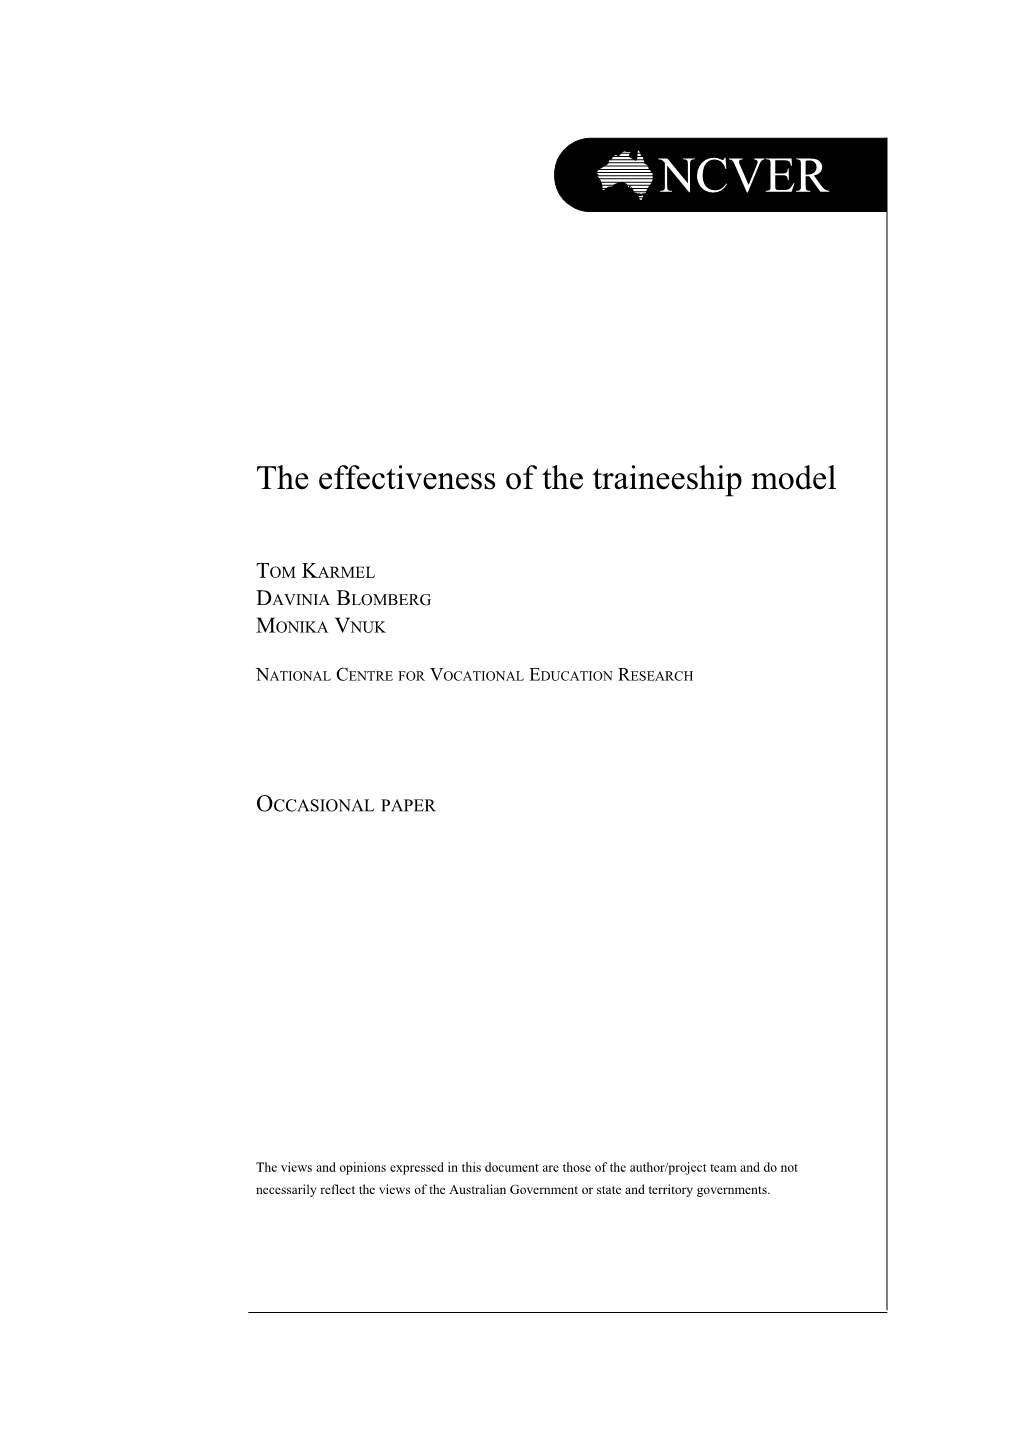 The Effectiveness of the Traineeship Model